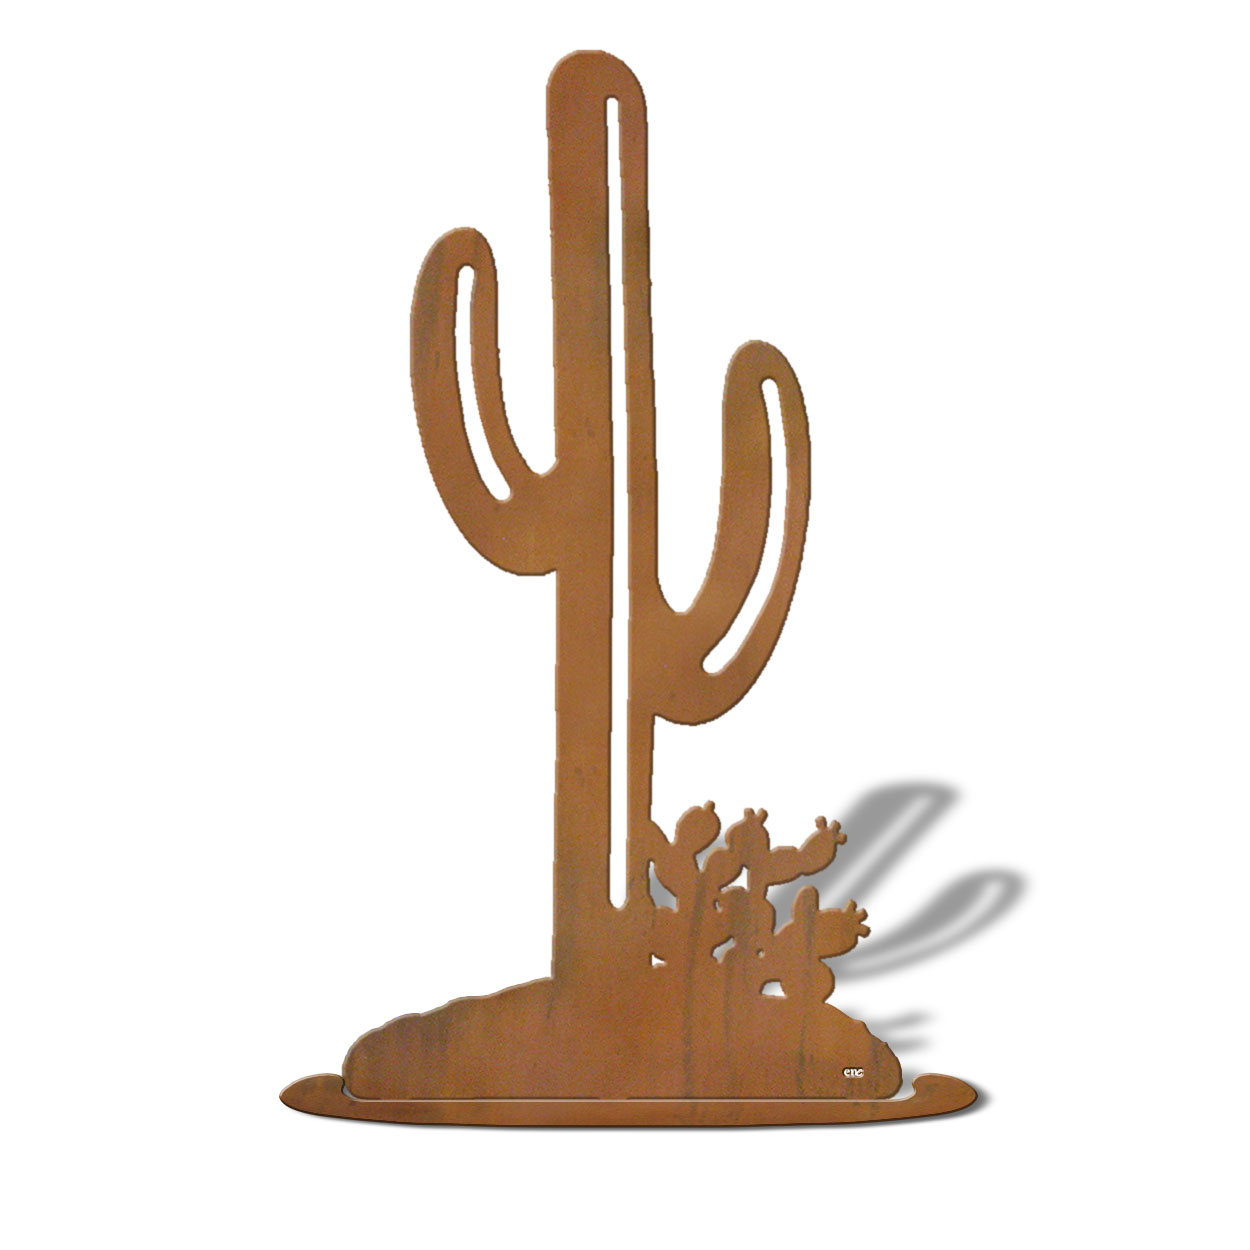 623408r - Tabletop Art - 10in x 18in - Cactus - Rust Patina